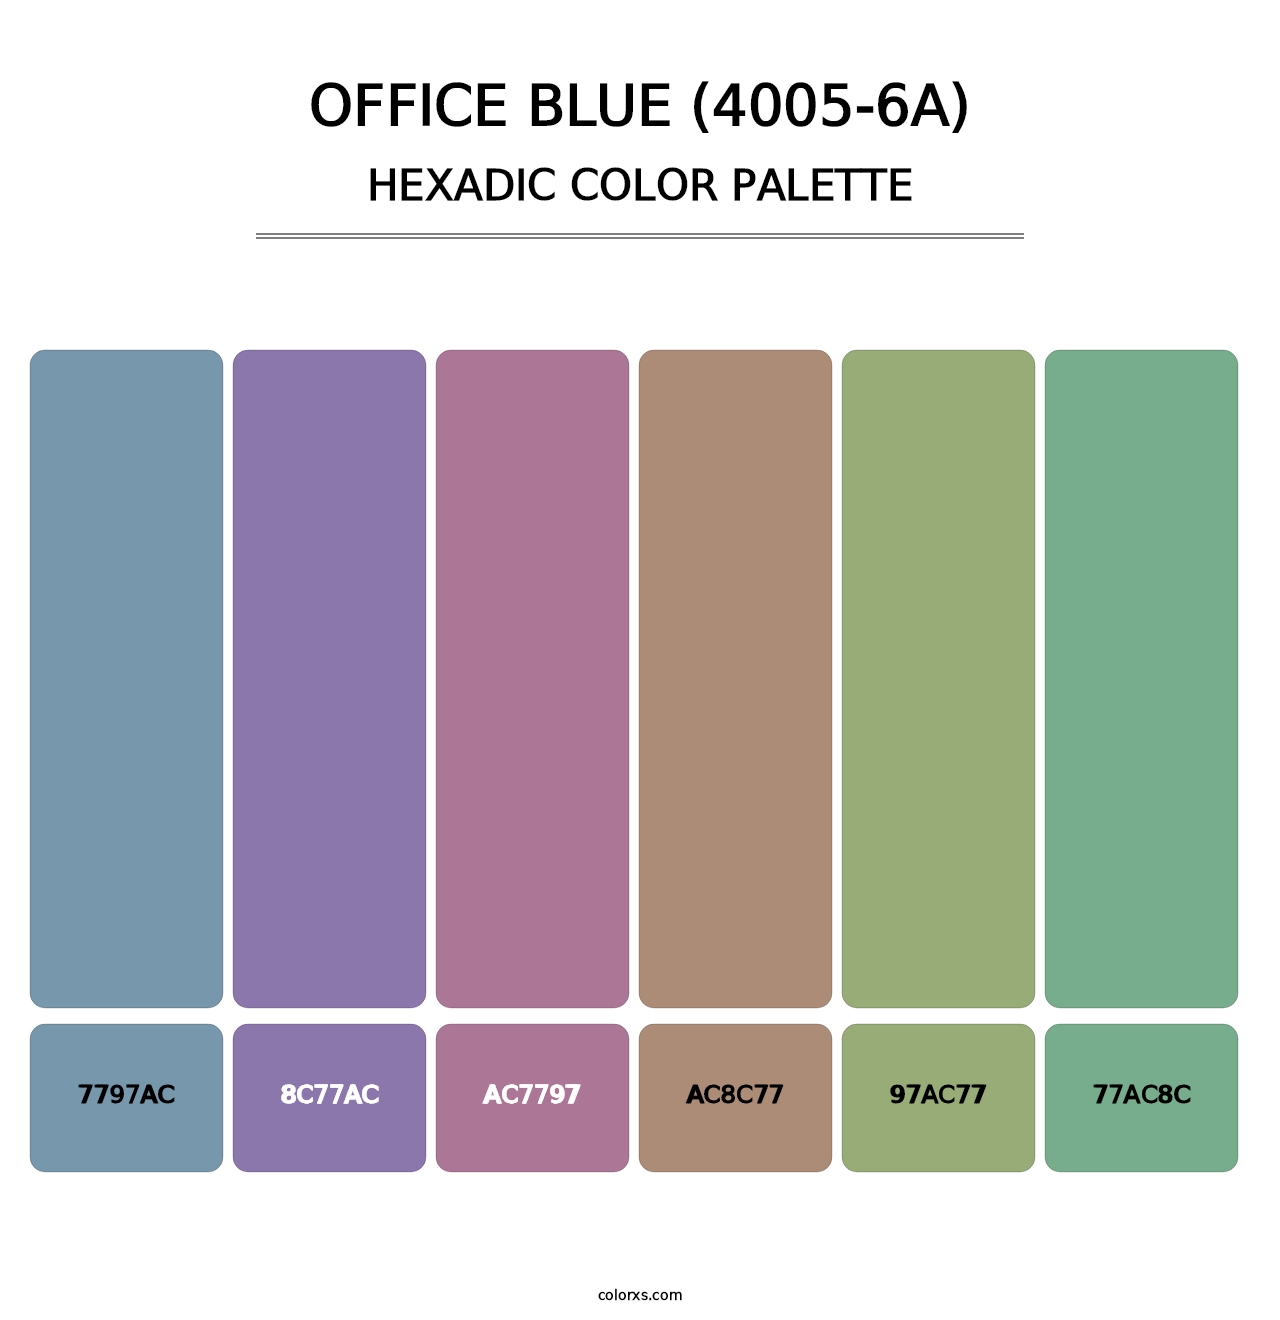 Office Blue (4005-6A) - Hexadic Color Palette